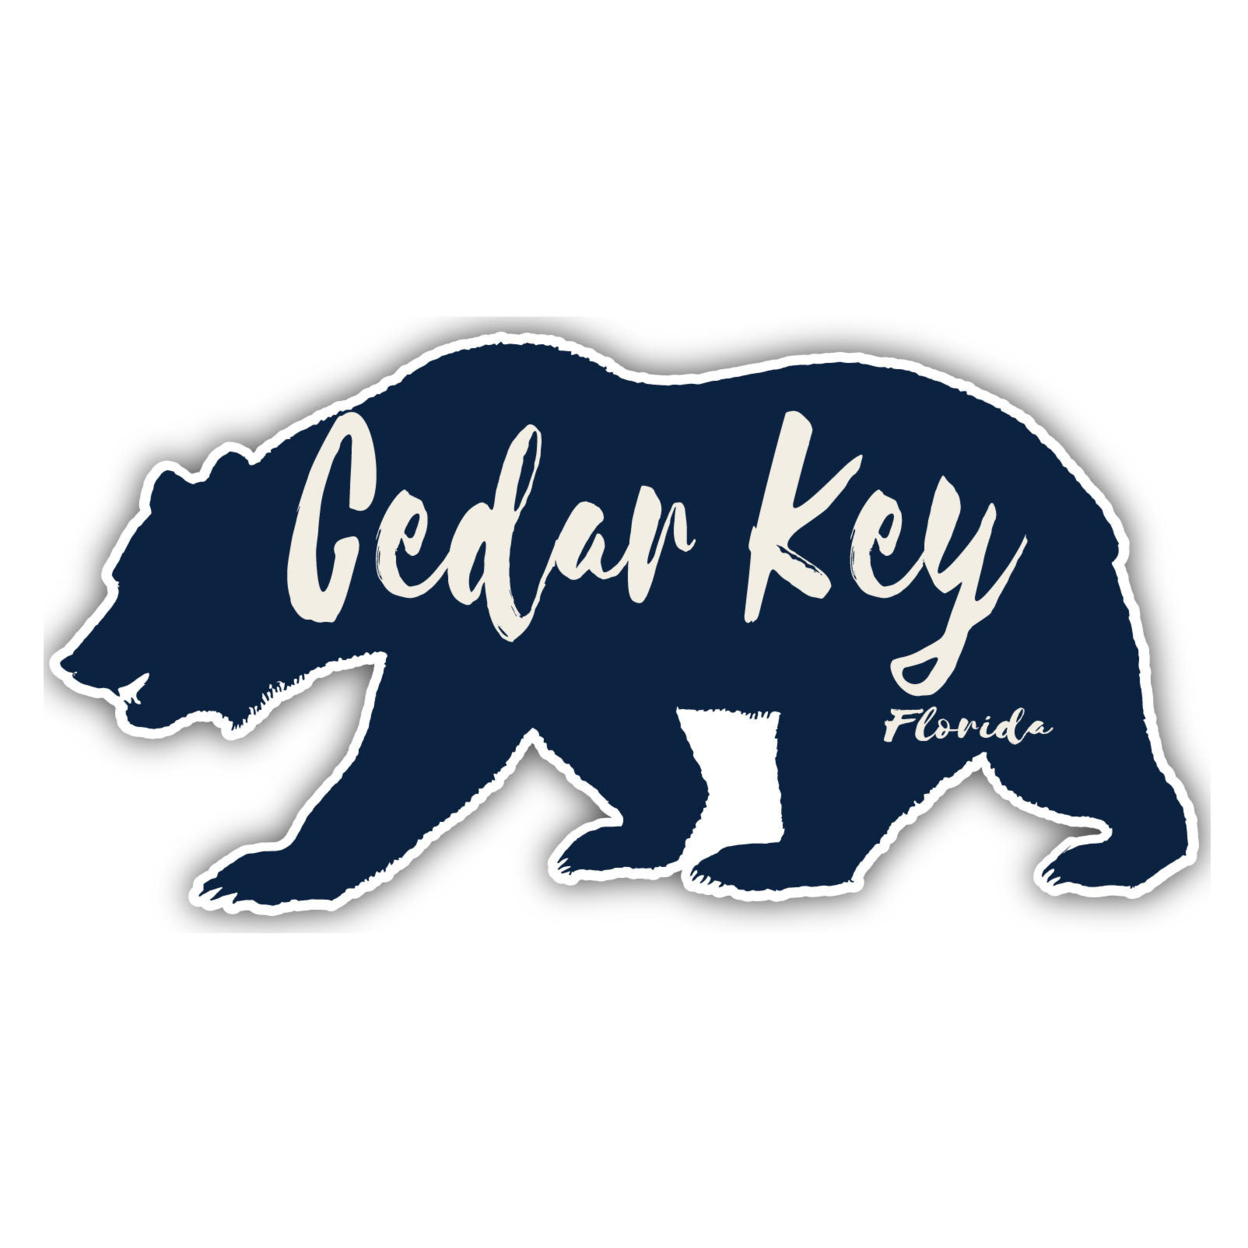 Cedar Key Florida Souvenir Decorative Stickers (Choose Theme And Size) - 4-Pack, 12-Inch, Tent